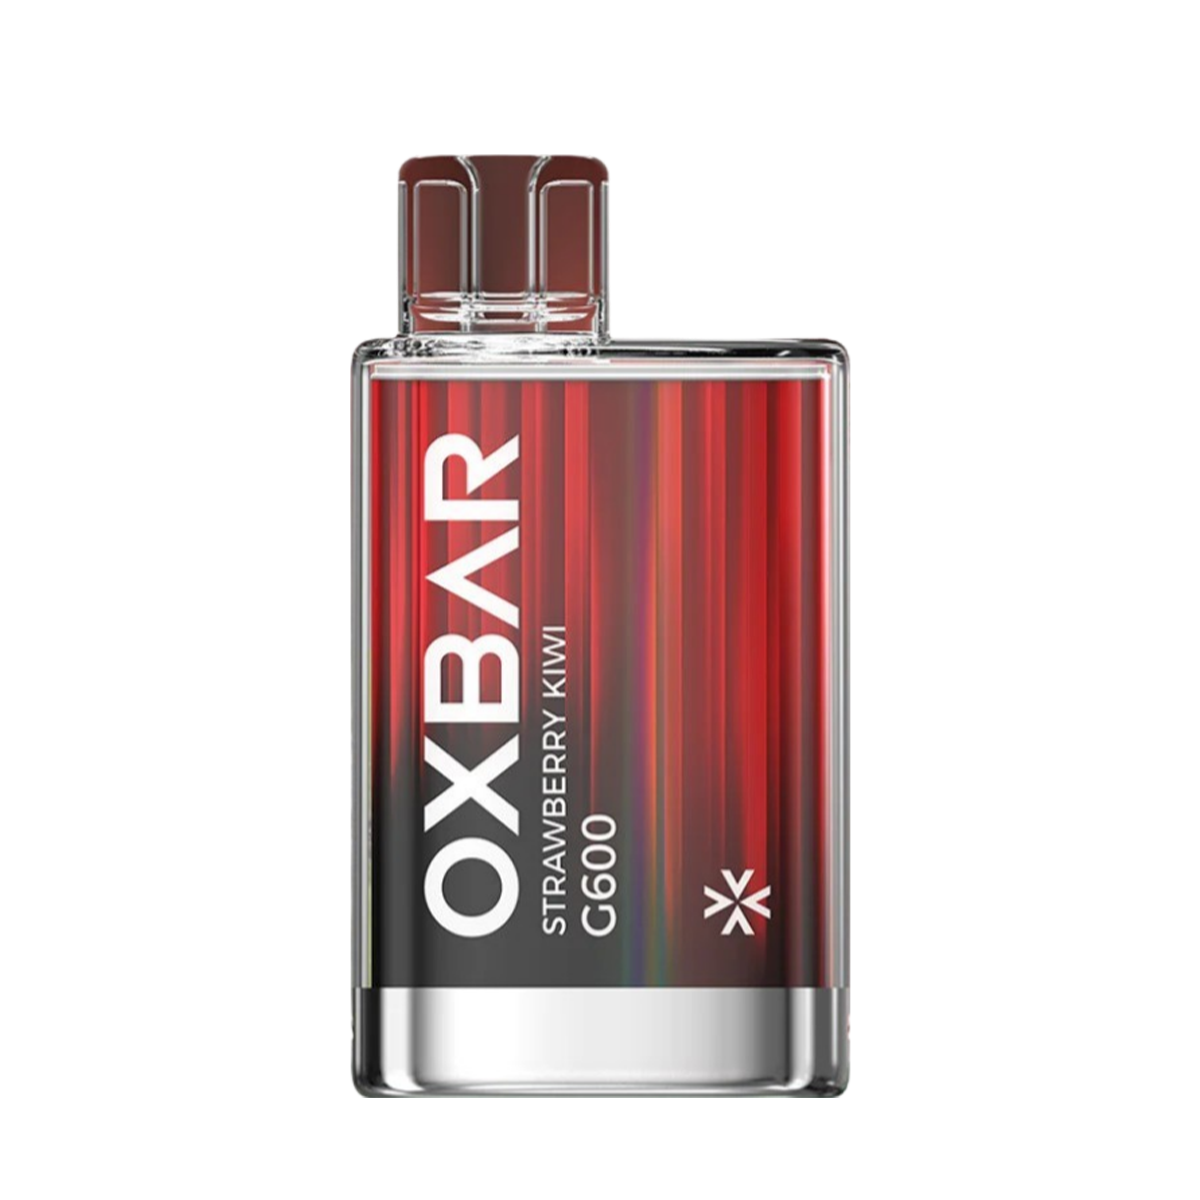 Oxbar G600 Disposable Vape Strawberry Kiwi  